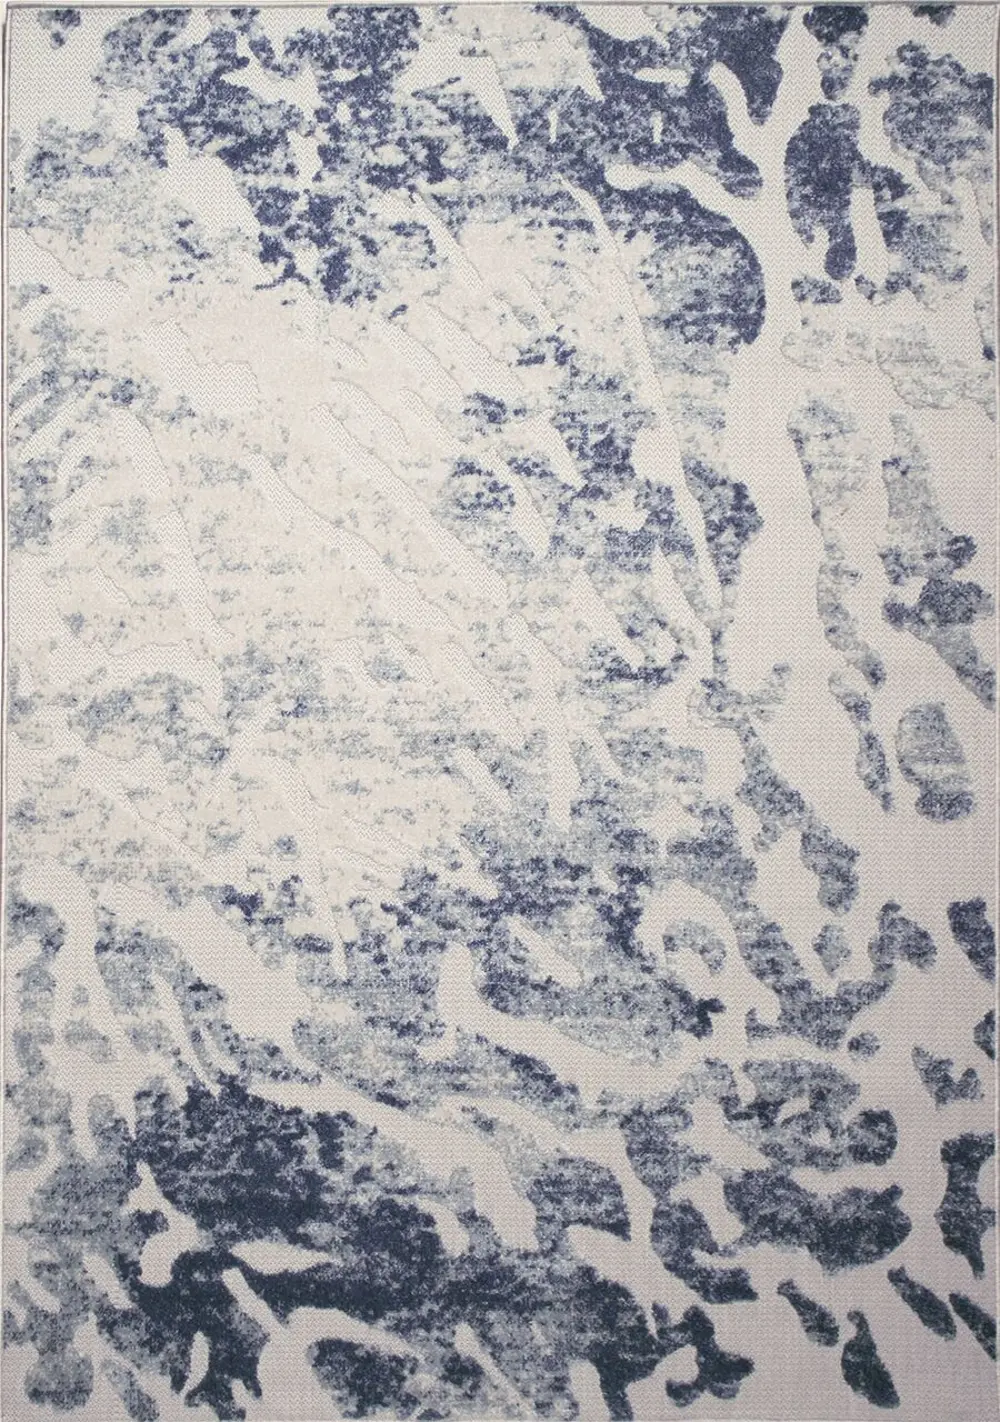 5 x 8 Medium Distressed Splatter Cream and Blue Rug - Alta-1